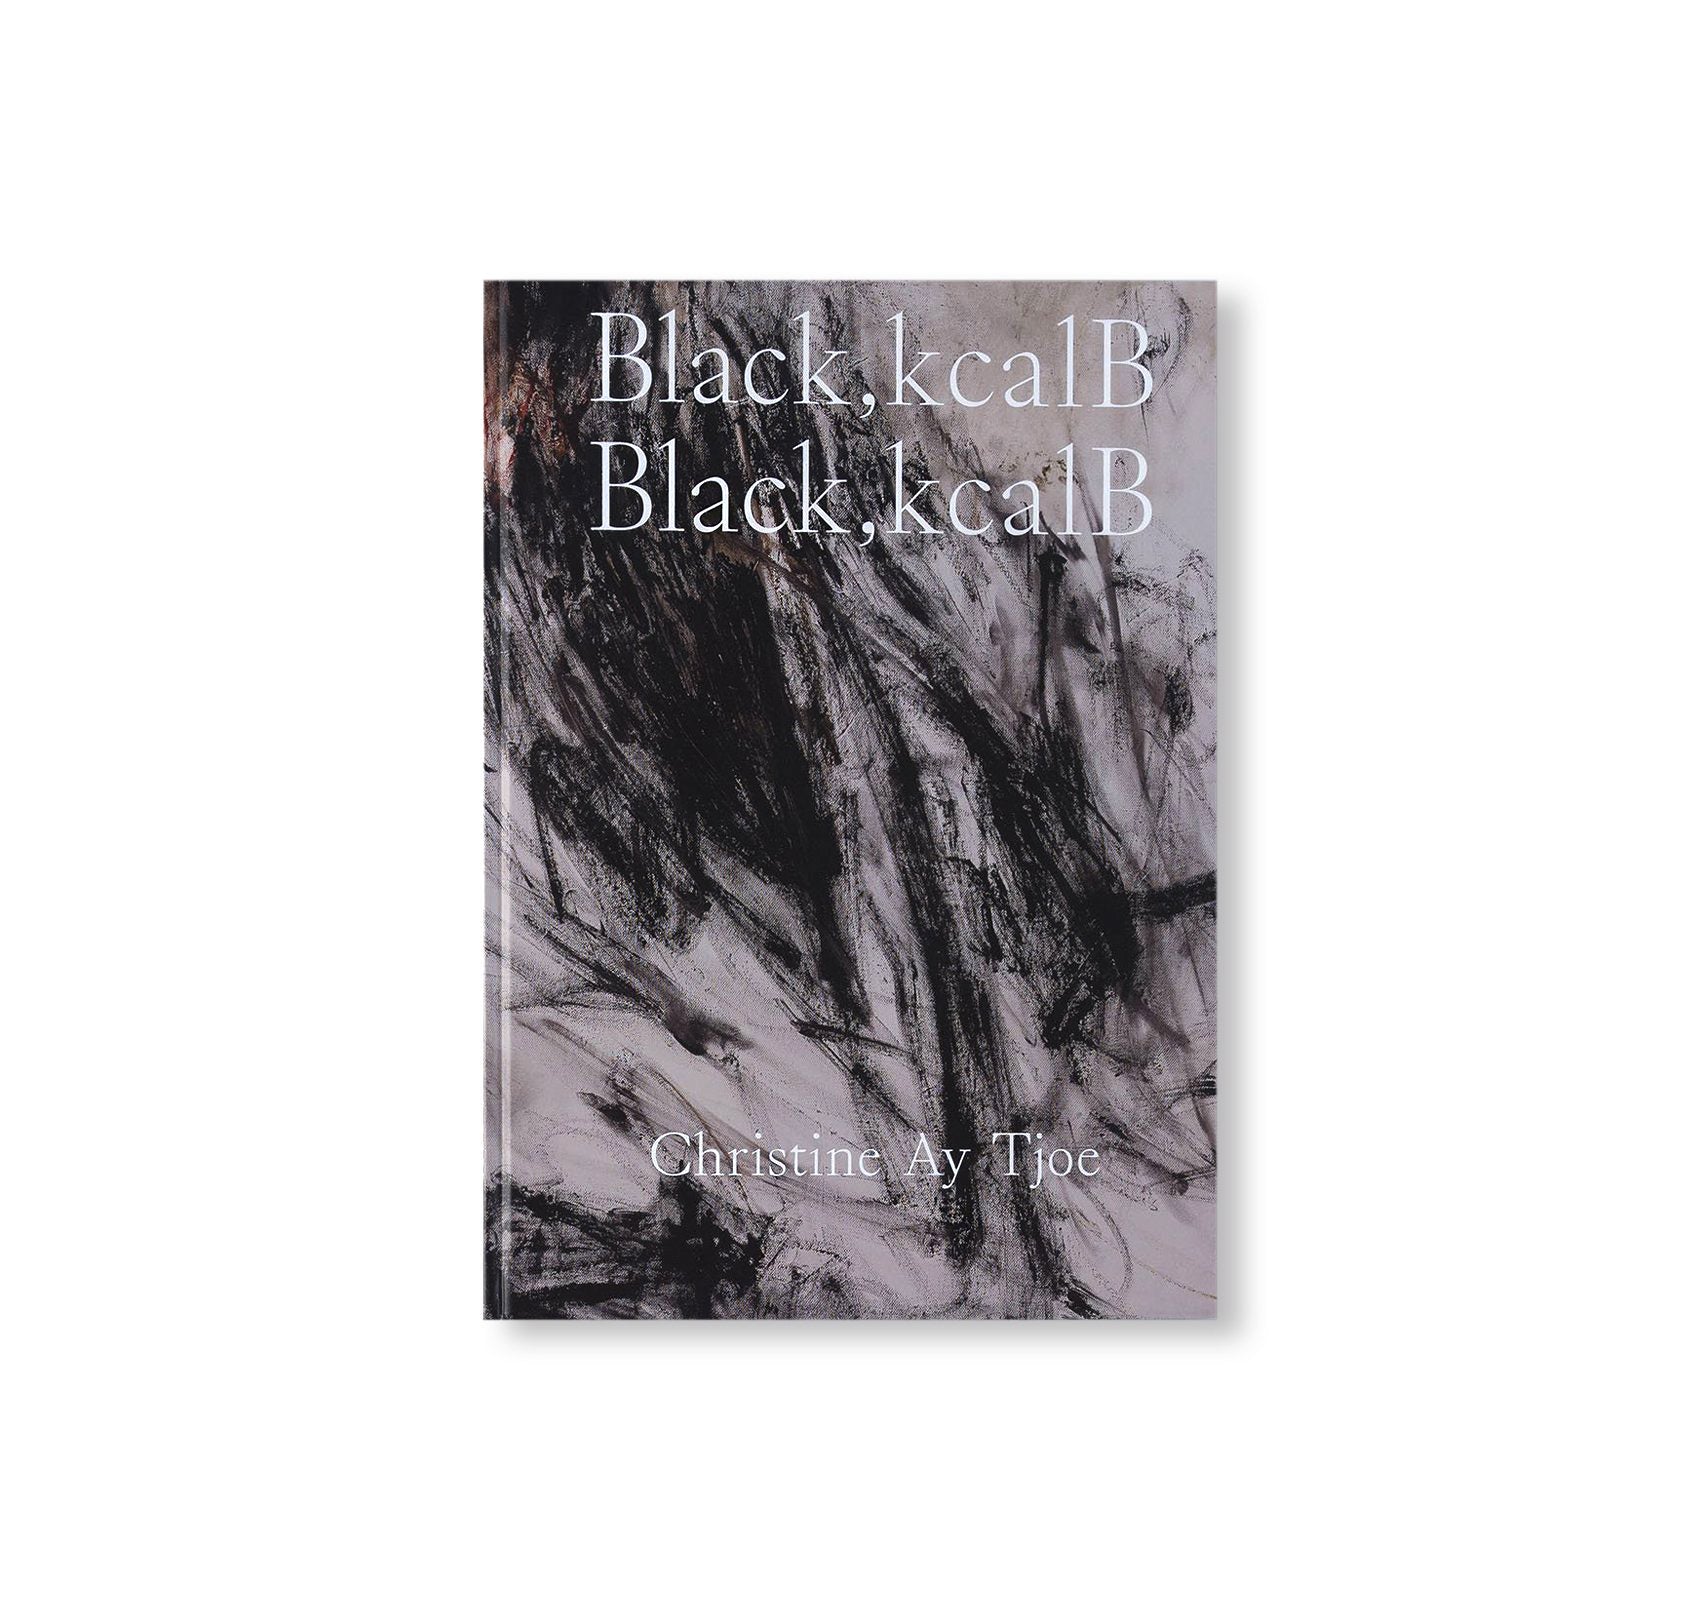 BLACK, KCALB BLACK, KCALB by Christine Ay Tjoe